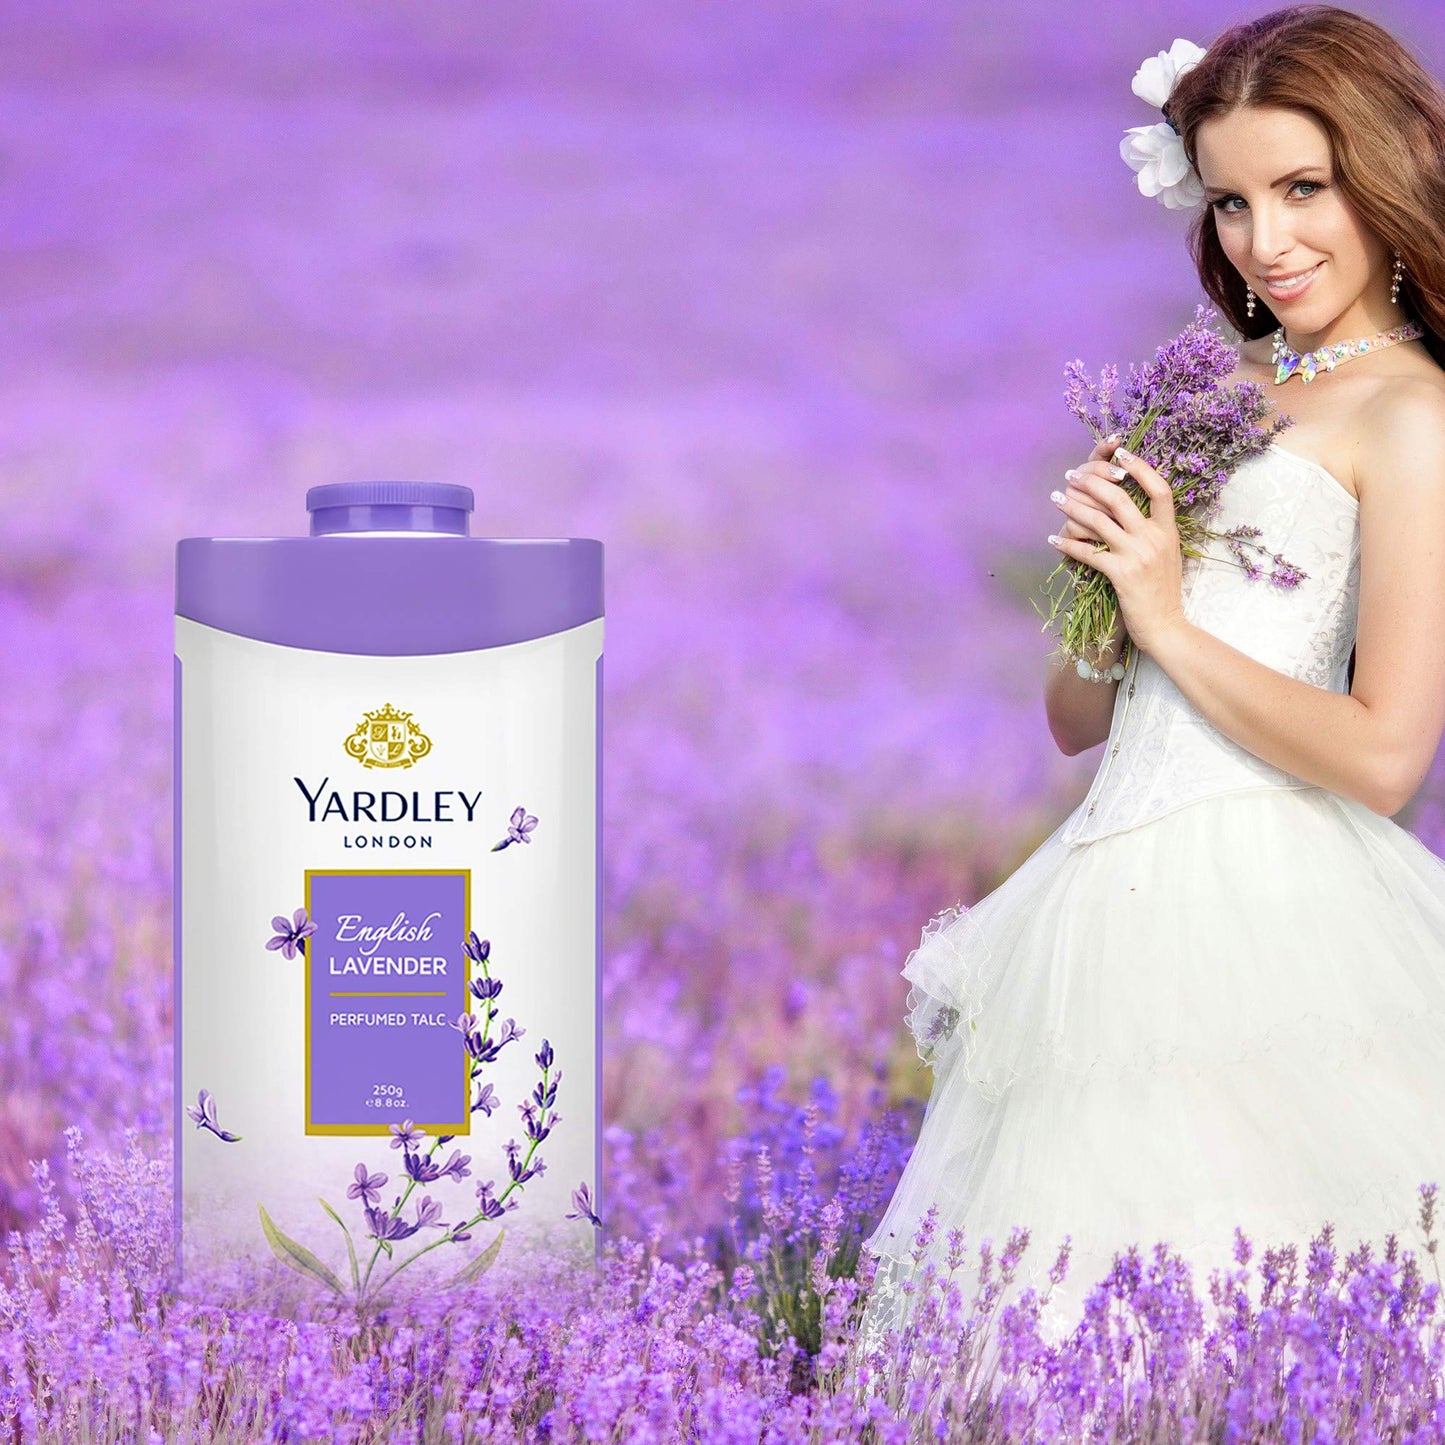 Yardley London Twin Talc Floral (2 X 250 gm) English Lavender + Imperial Jasmine